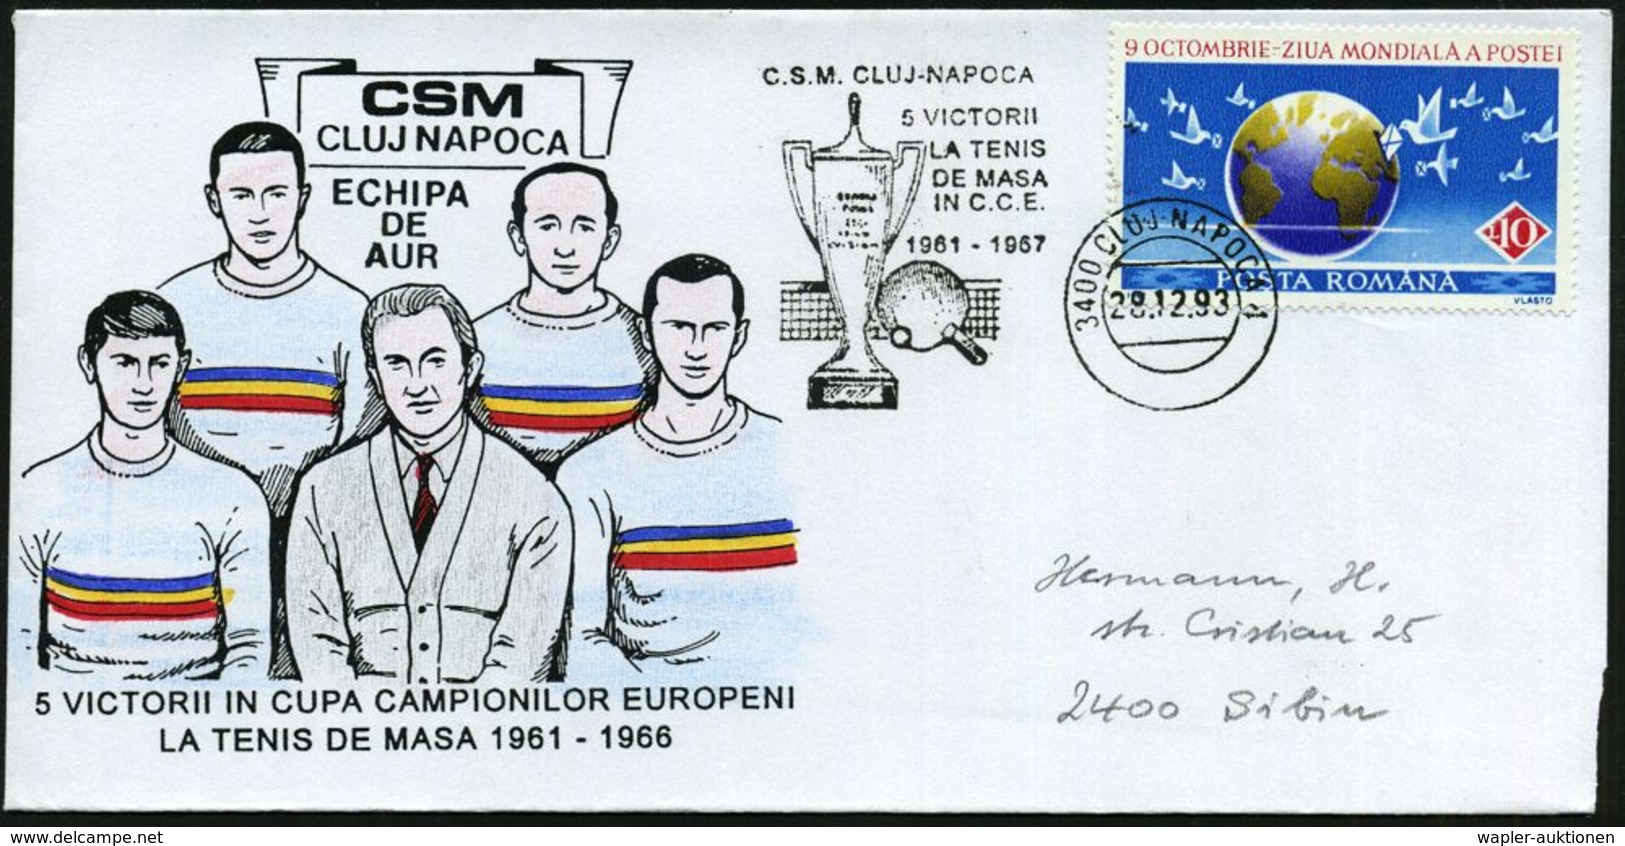 RUMÄNIEN 1993 (28.12.) FaSSt: 3400 CLUJ-NAPOCA 1/CSM CLUJ-NAPOCA/5 VICTORII/LA TENIS/DE MASA.. (Pokal Etc) Inl.-SU.: CSM - Tennis Tavolo